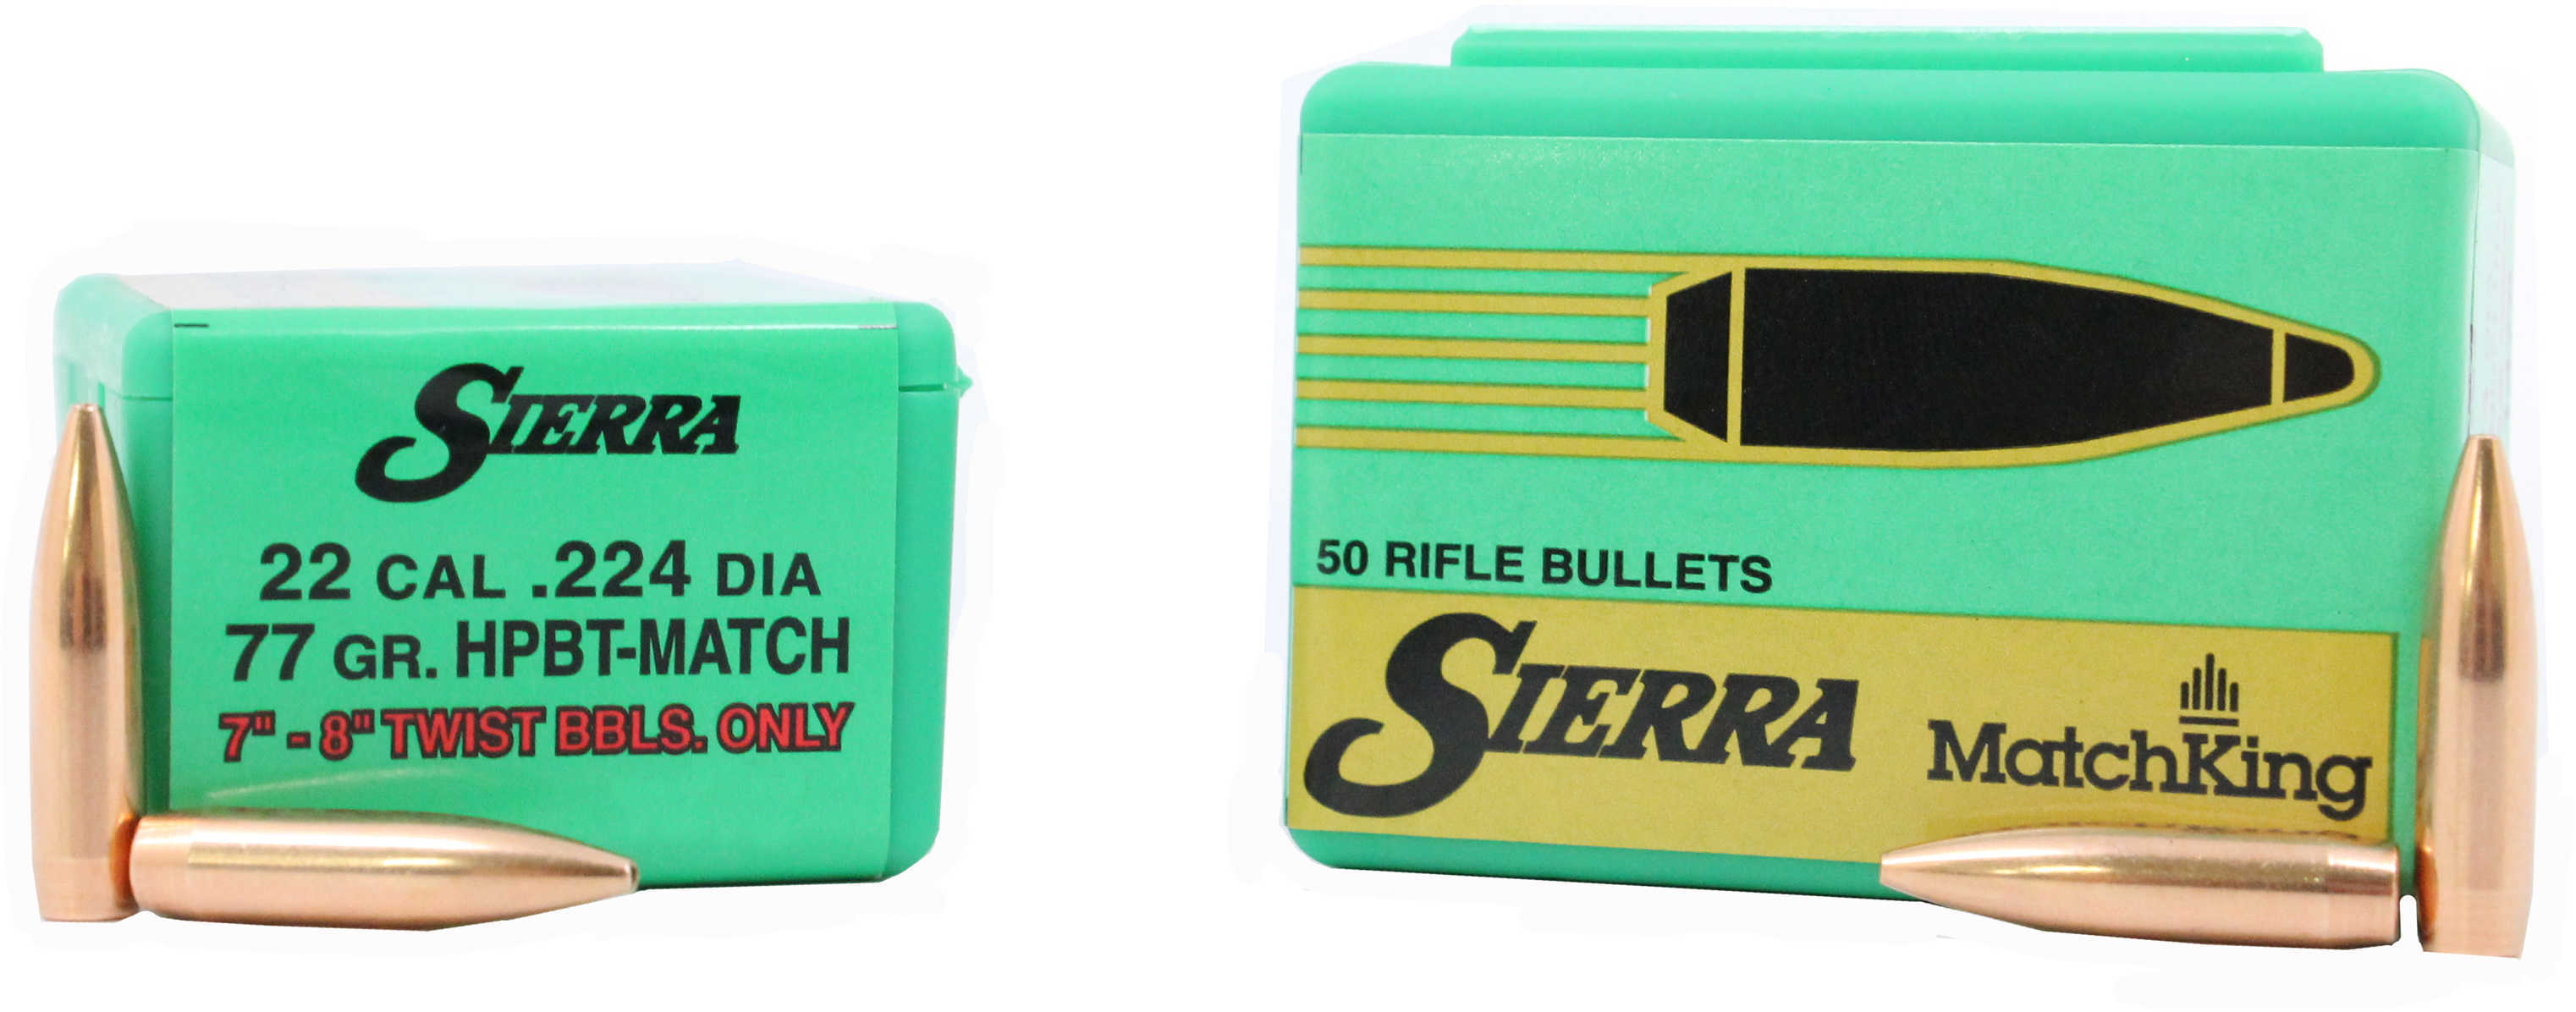 Sierra MatchKing 22 Caliber (.224) 77 Grains HPBT Bullets 50 Per Box Md: 9377T